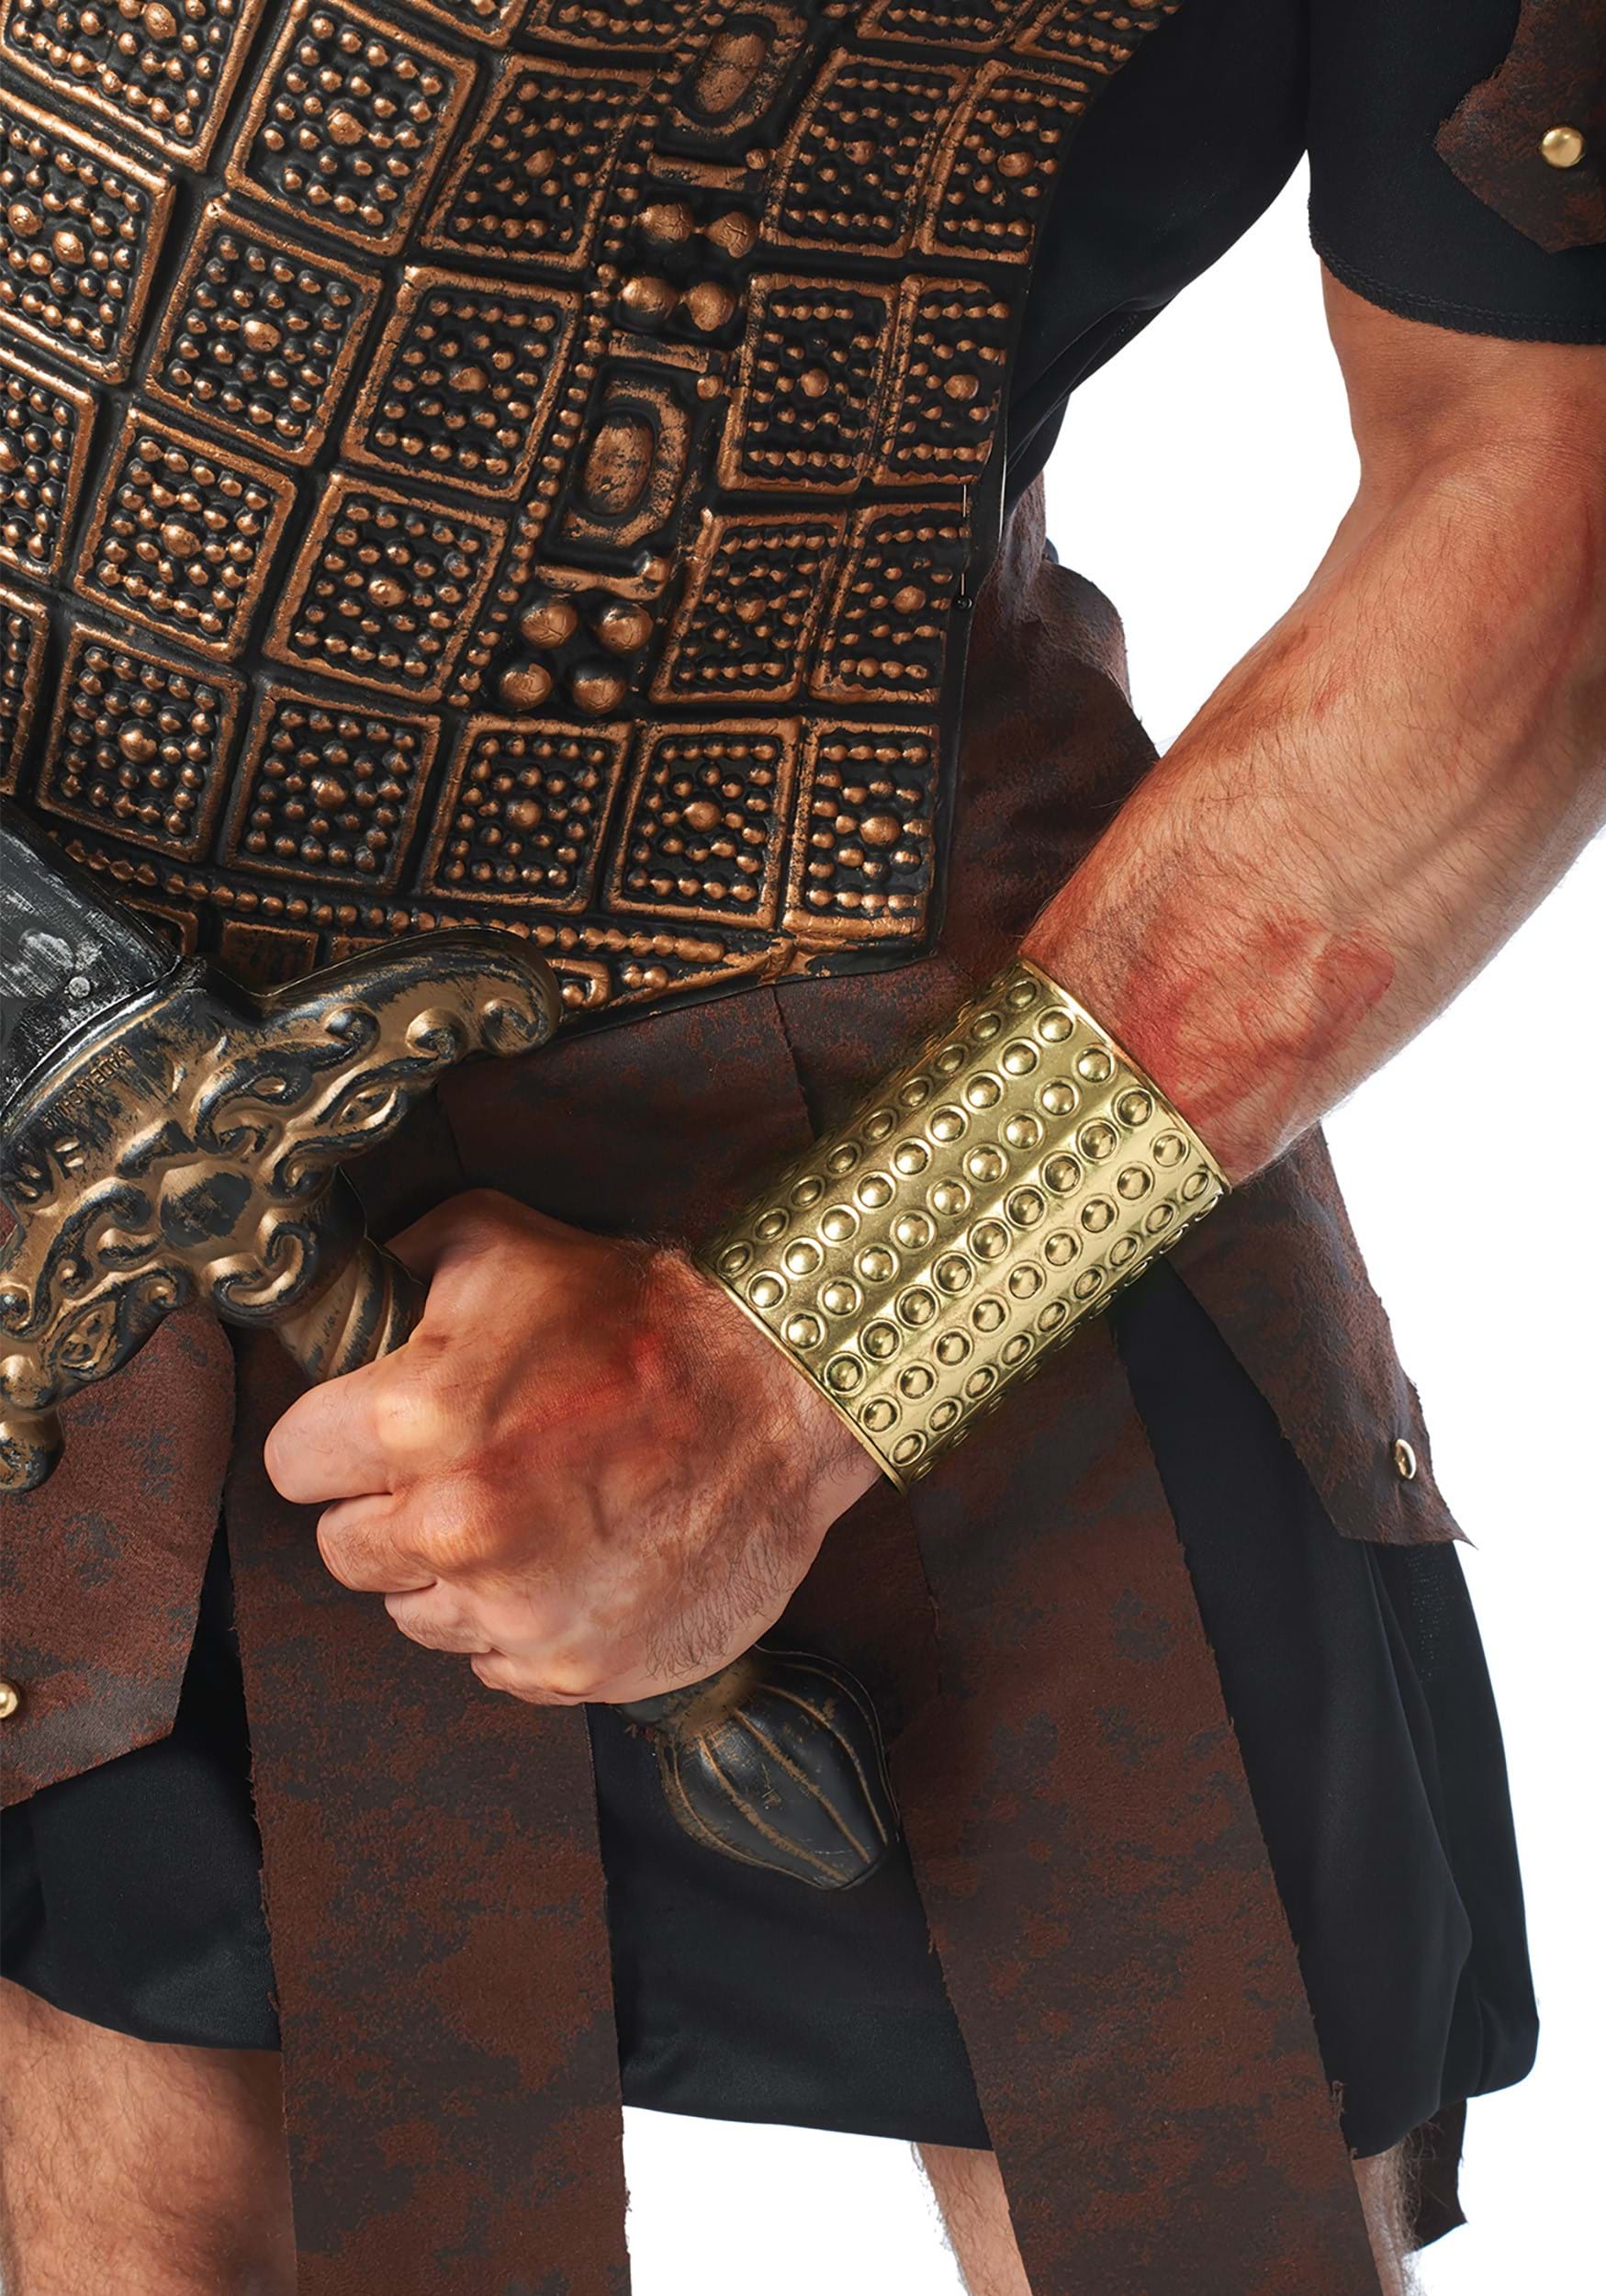 Studded Men's Gladiator Cuff